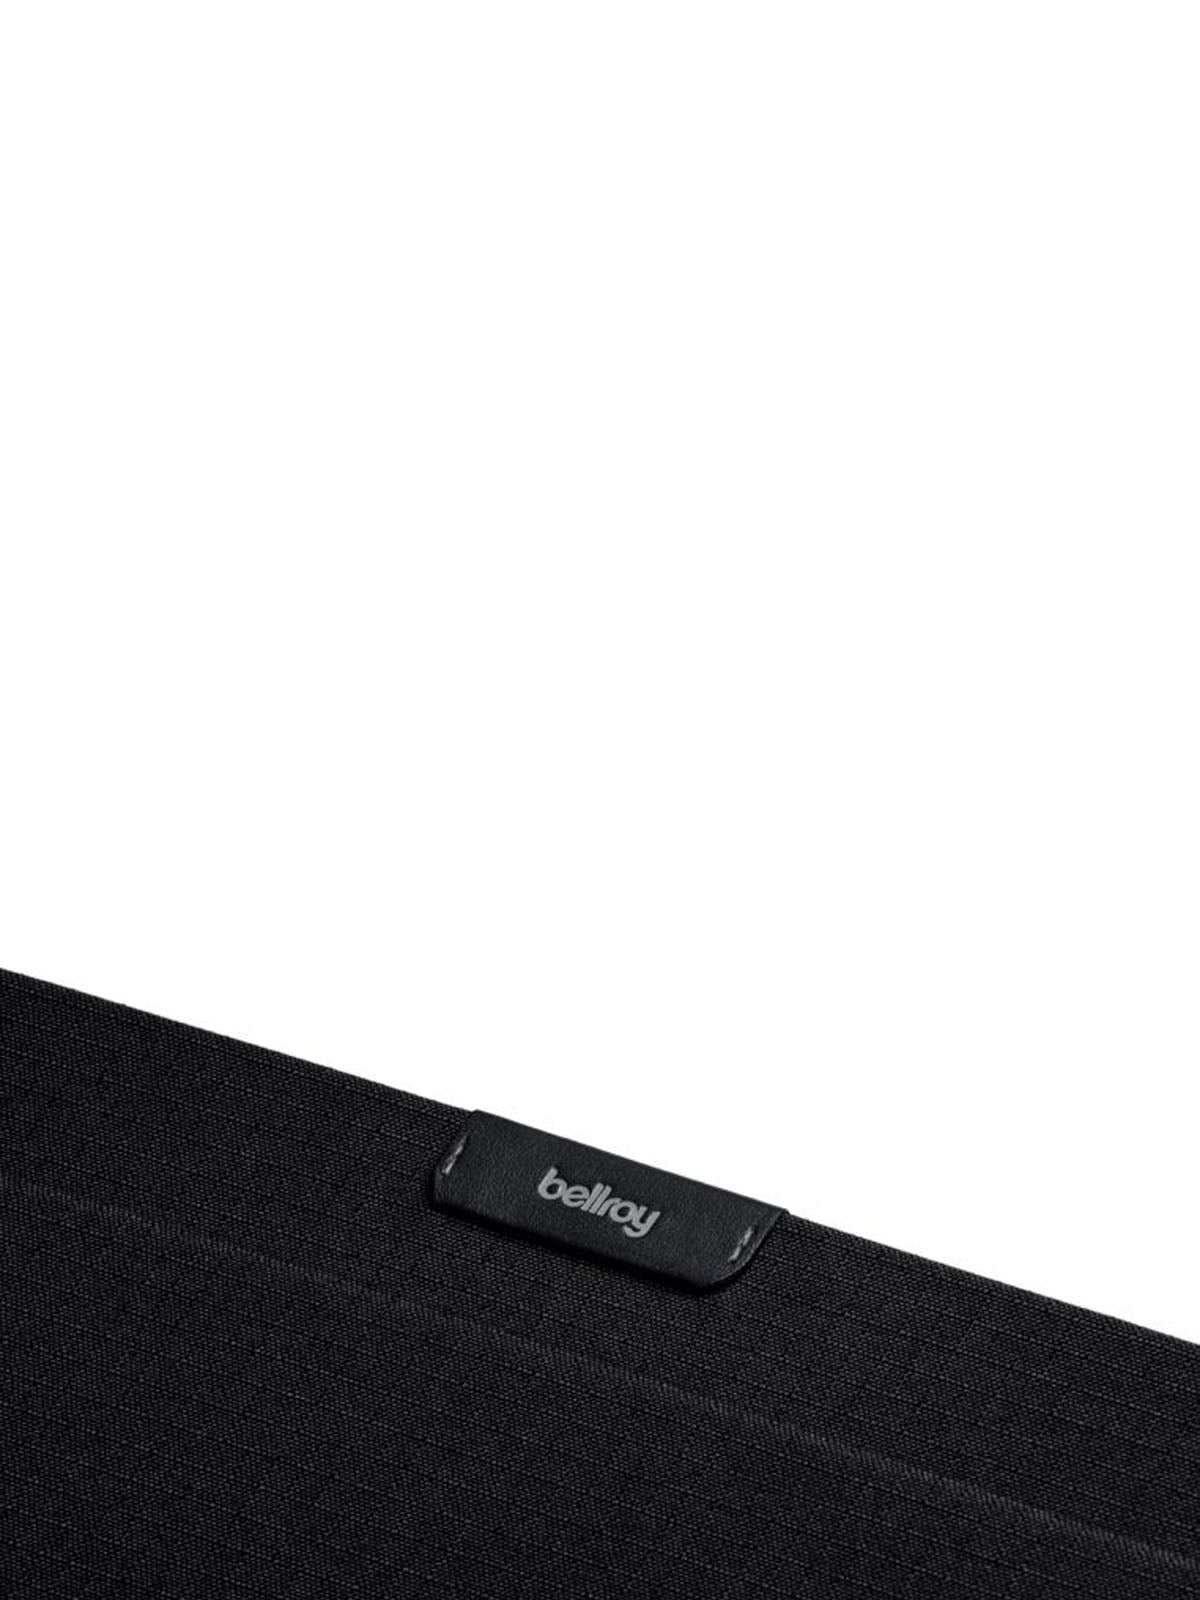 Bellroy Laptop Sleeve 16 Inch Black